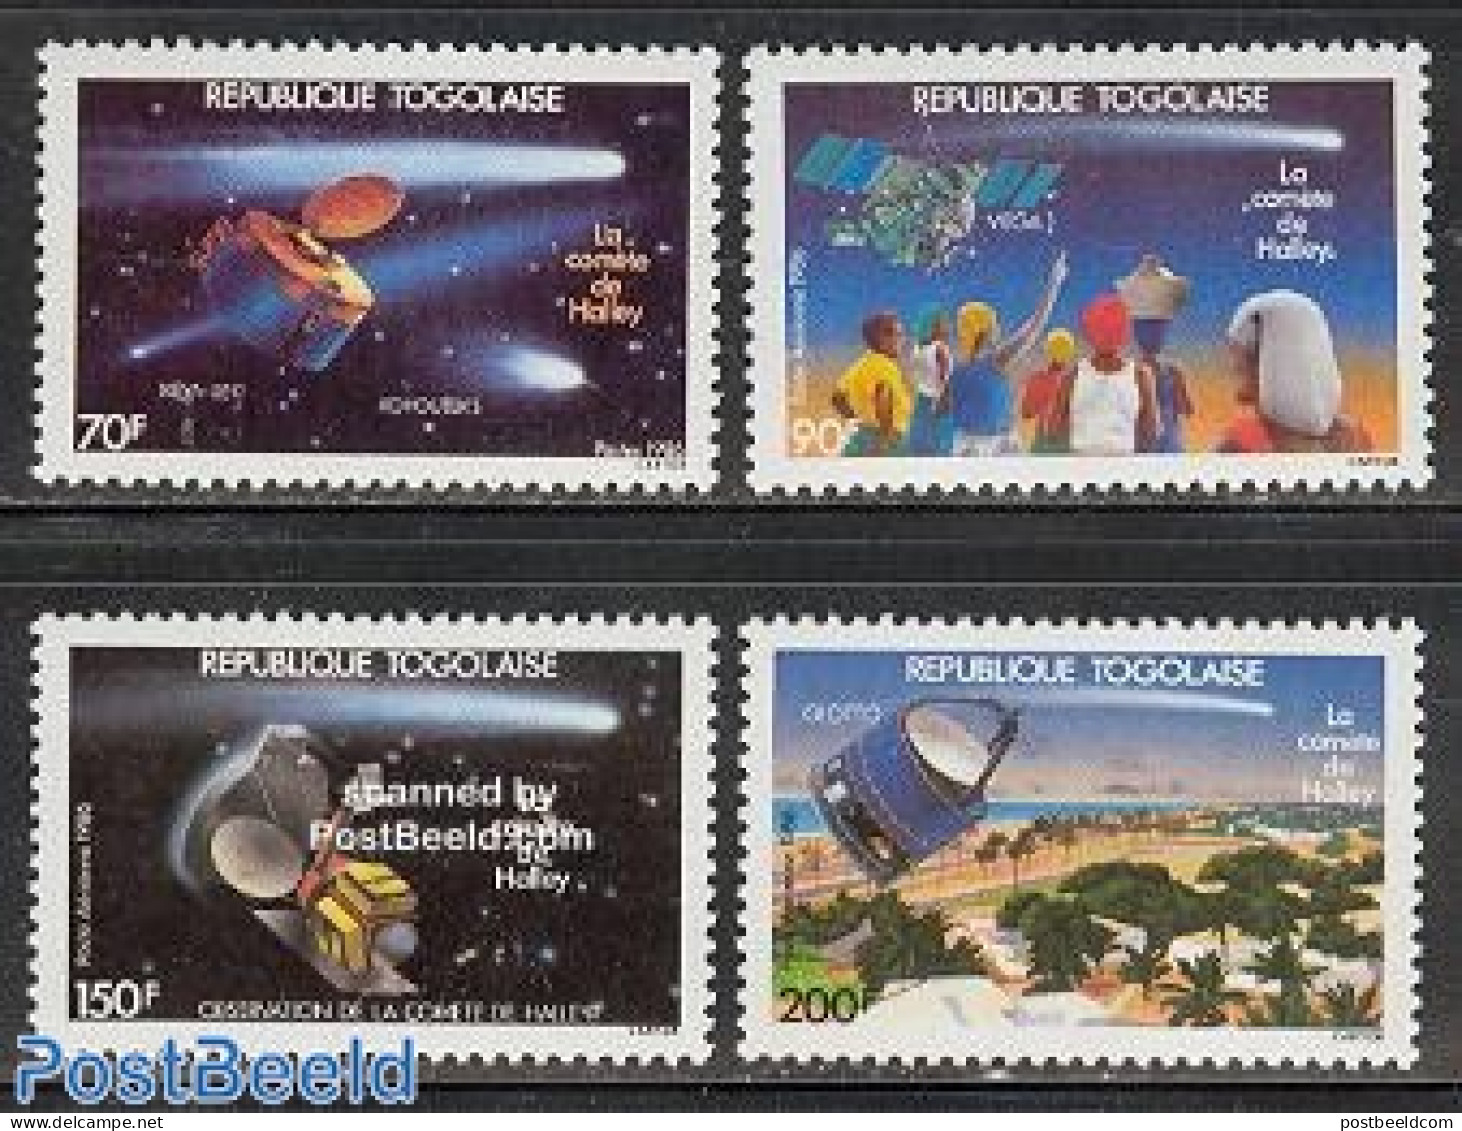 Togo 1986 Halleys Comet 4v, Mint NH, Science - Transport - Astronomy - Space Exploration - Halley's Comet - Astrologie